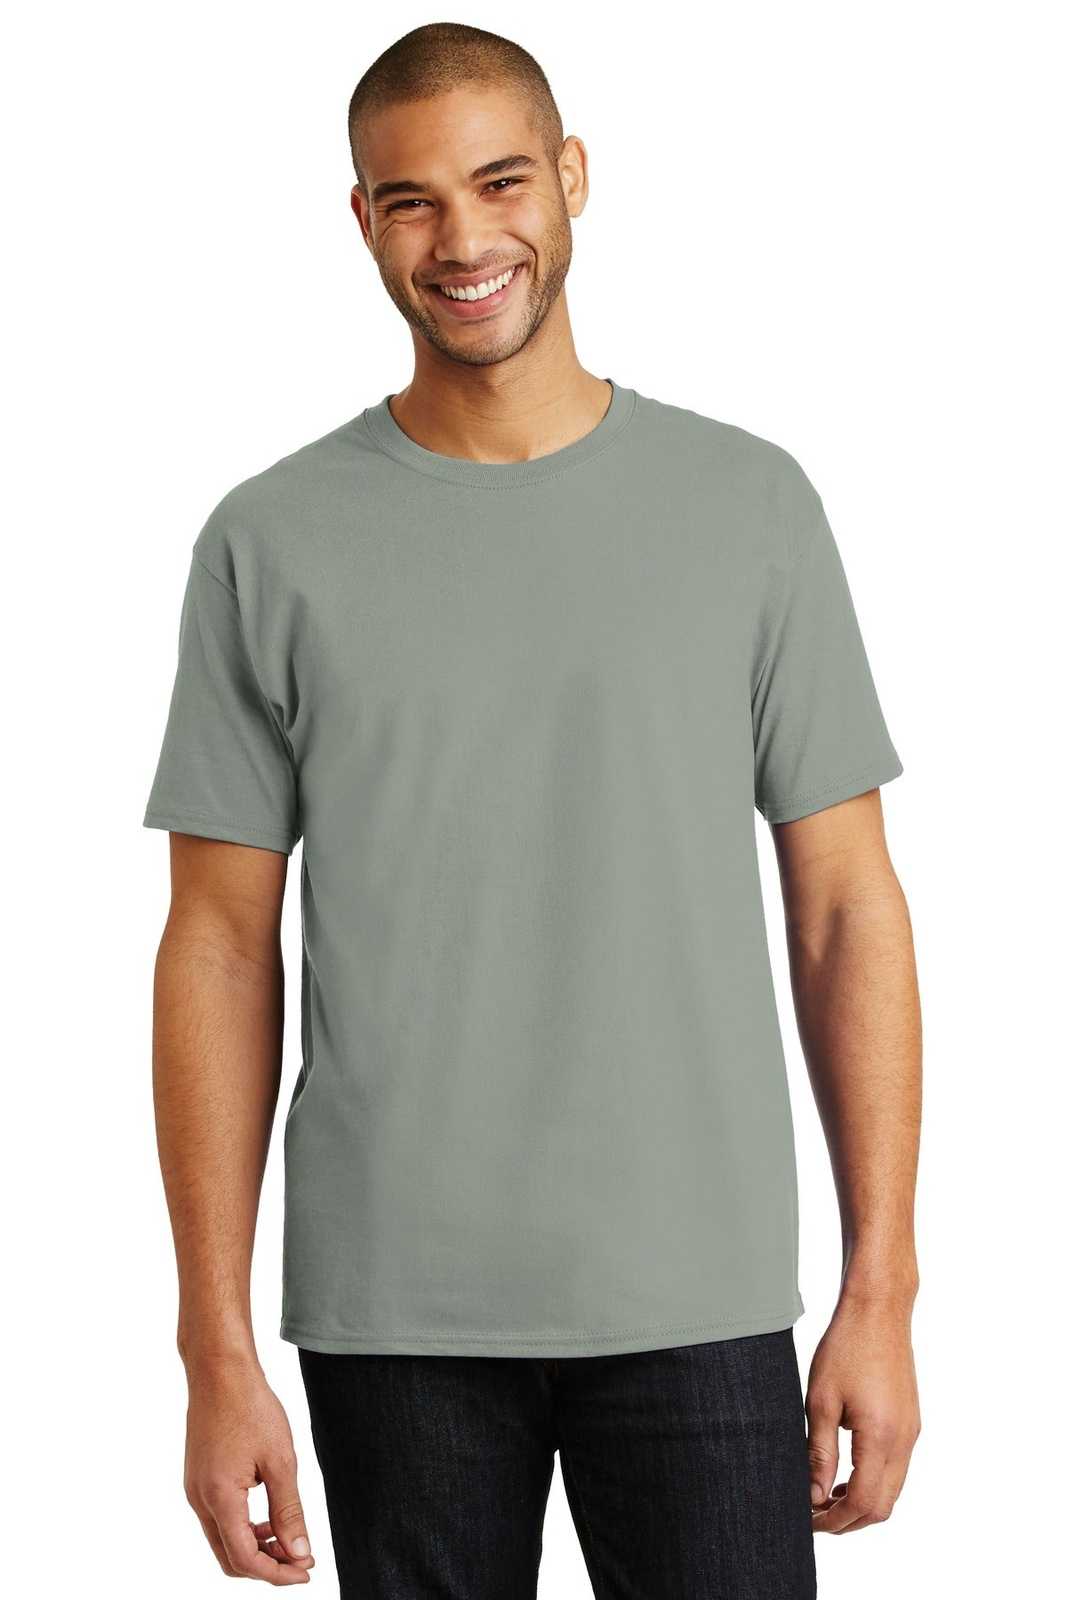 Hanes 5250 Tagless 100% Cotton T-Shirt - Stonewashed Green